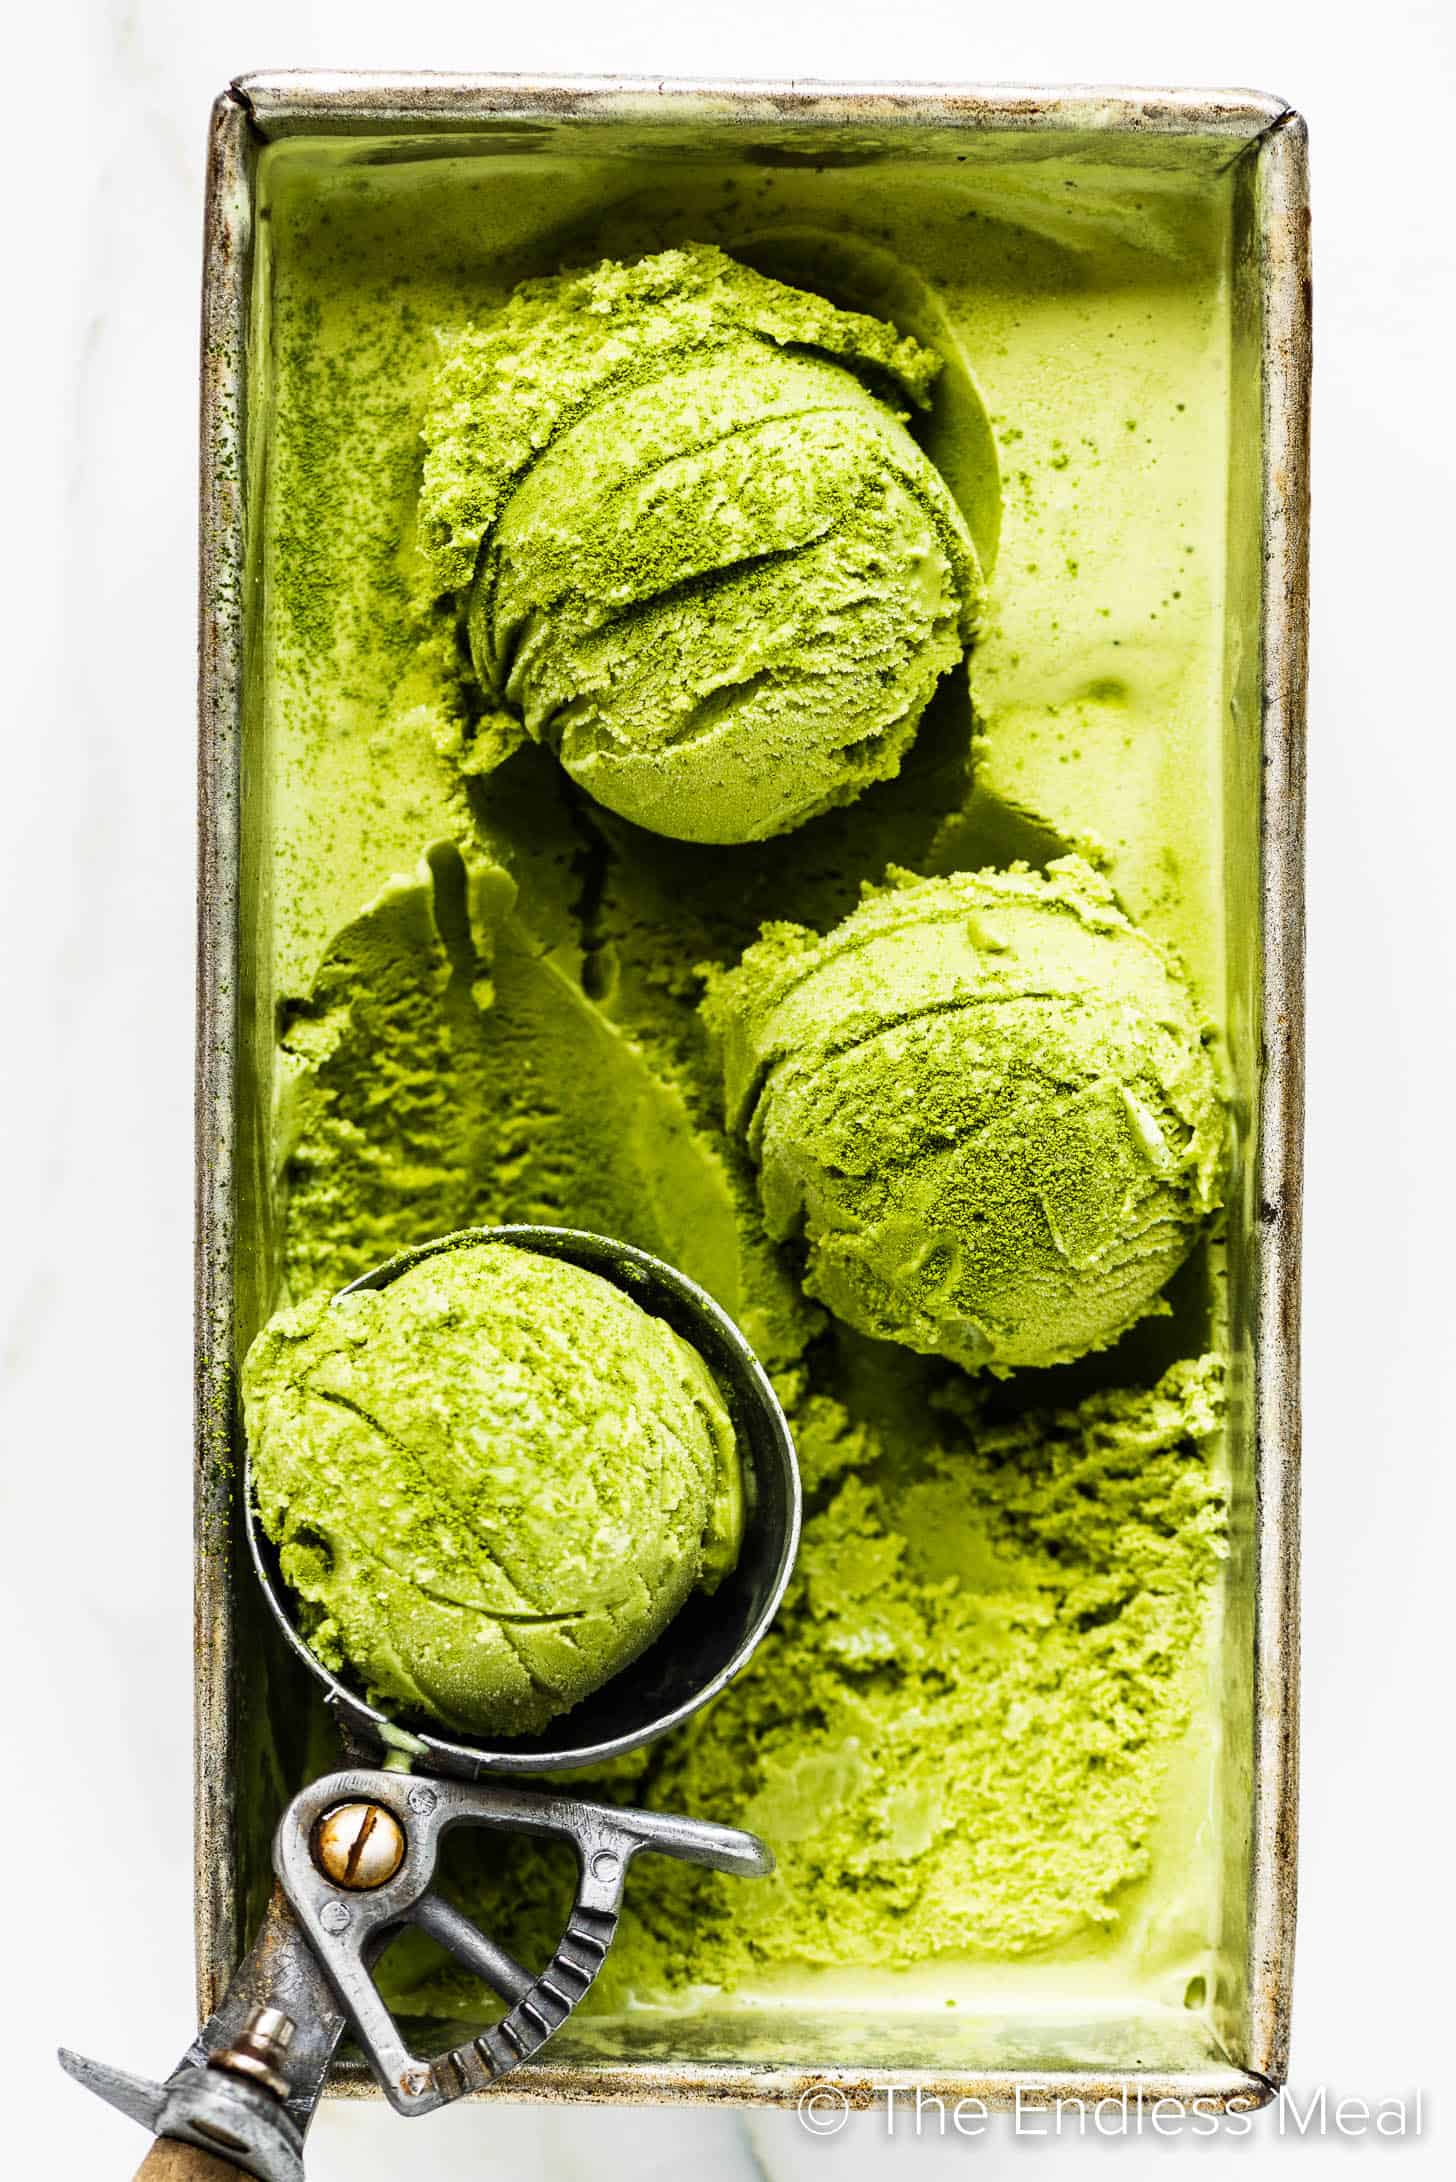 an ice cream scoop making balls of matcha ice cream